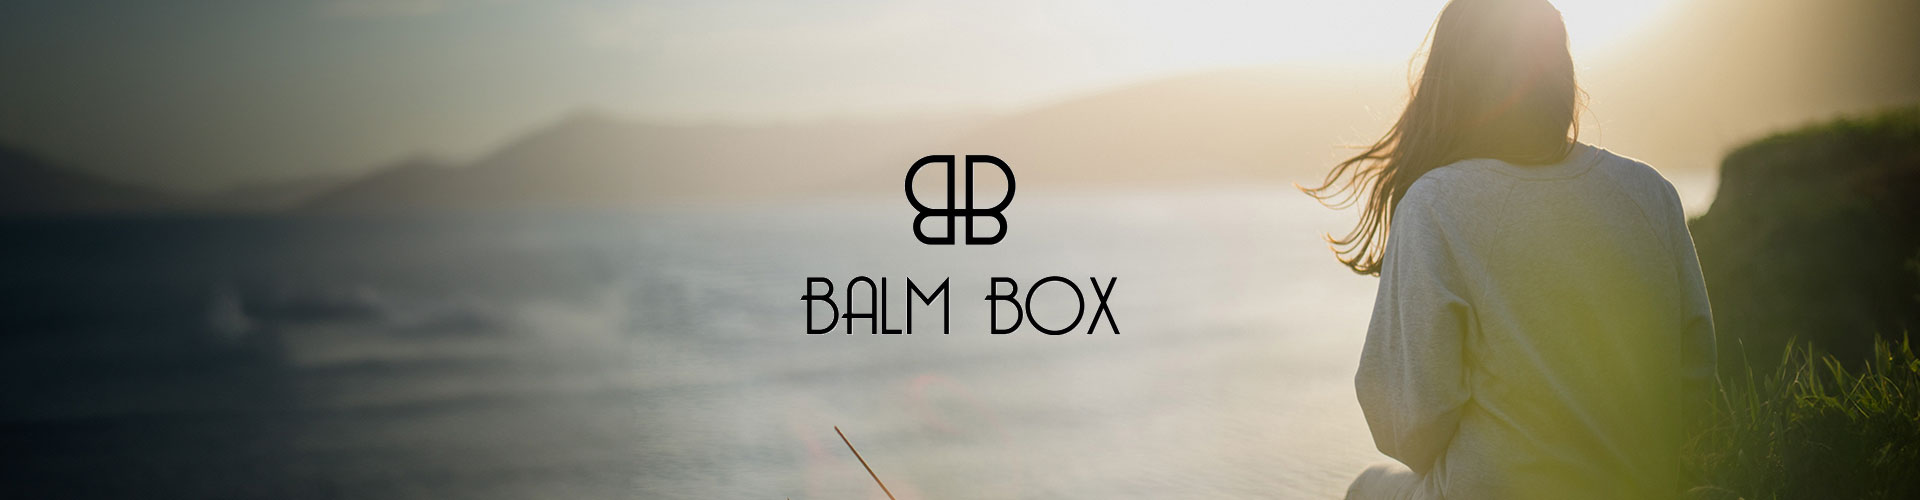 Balm Box banner